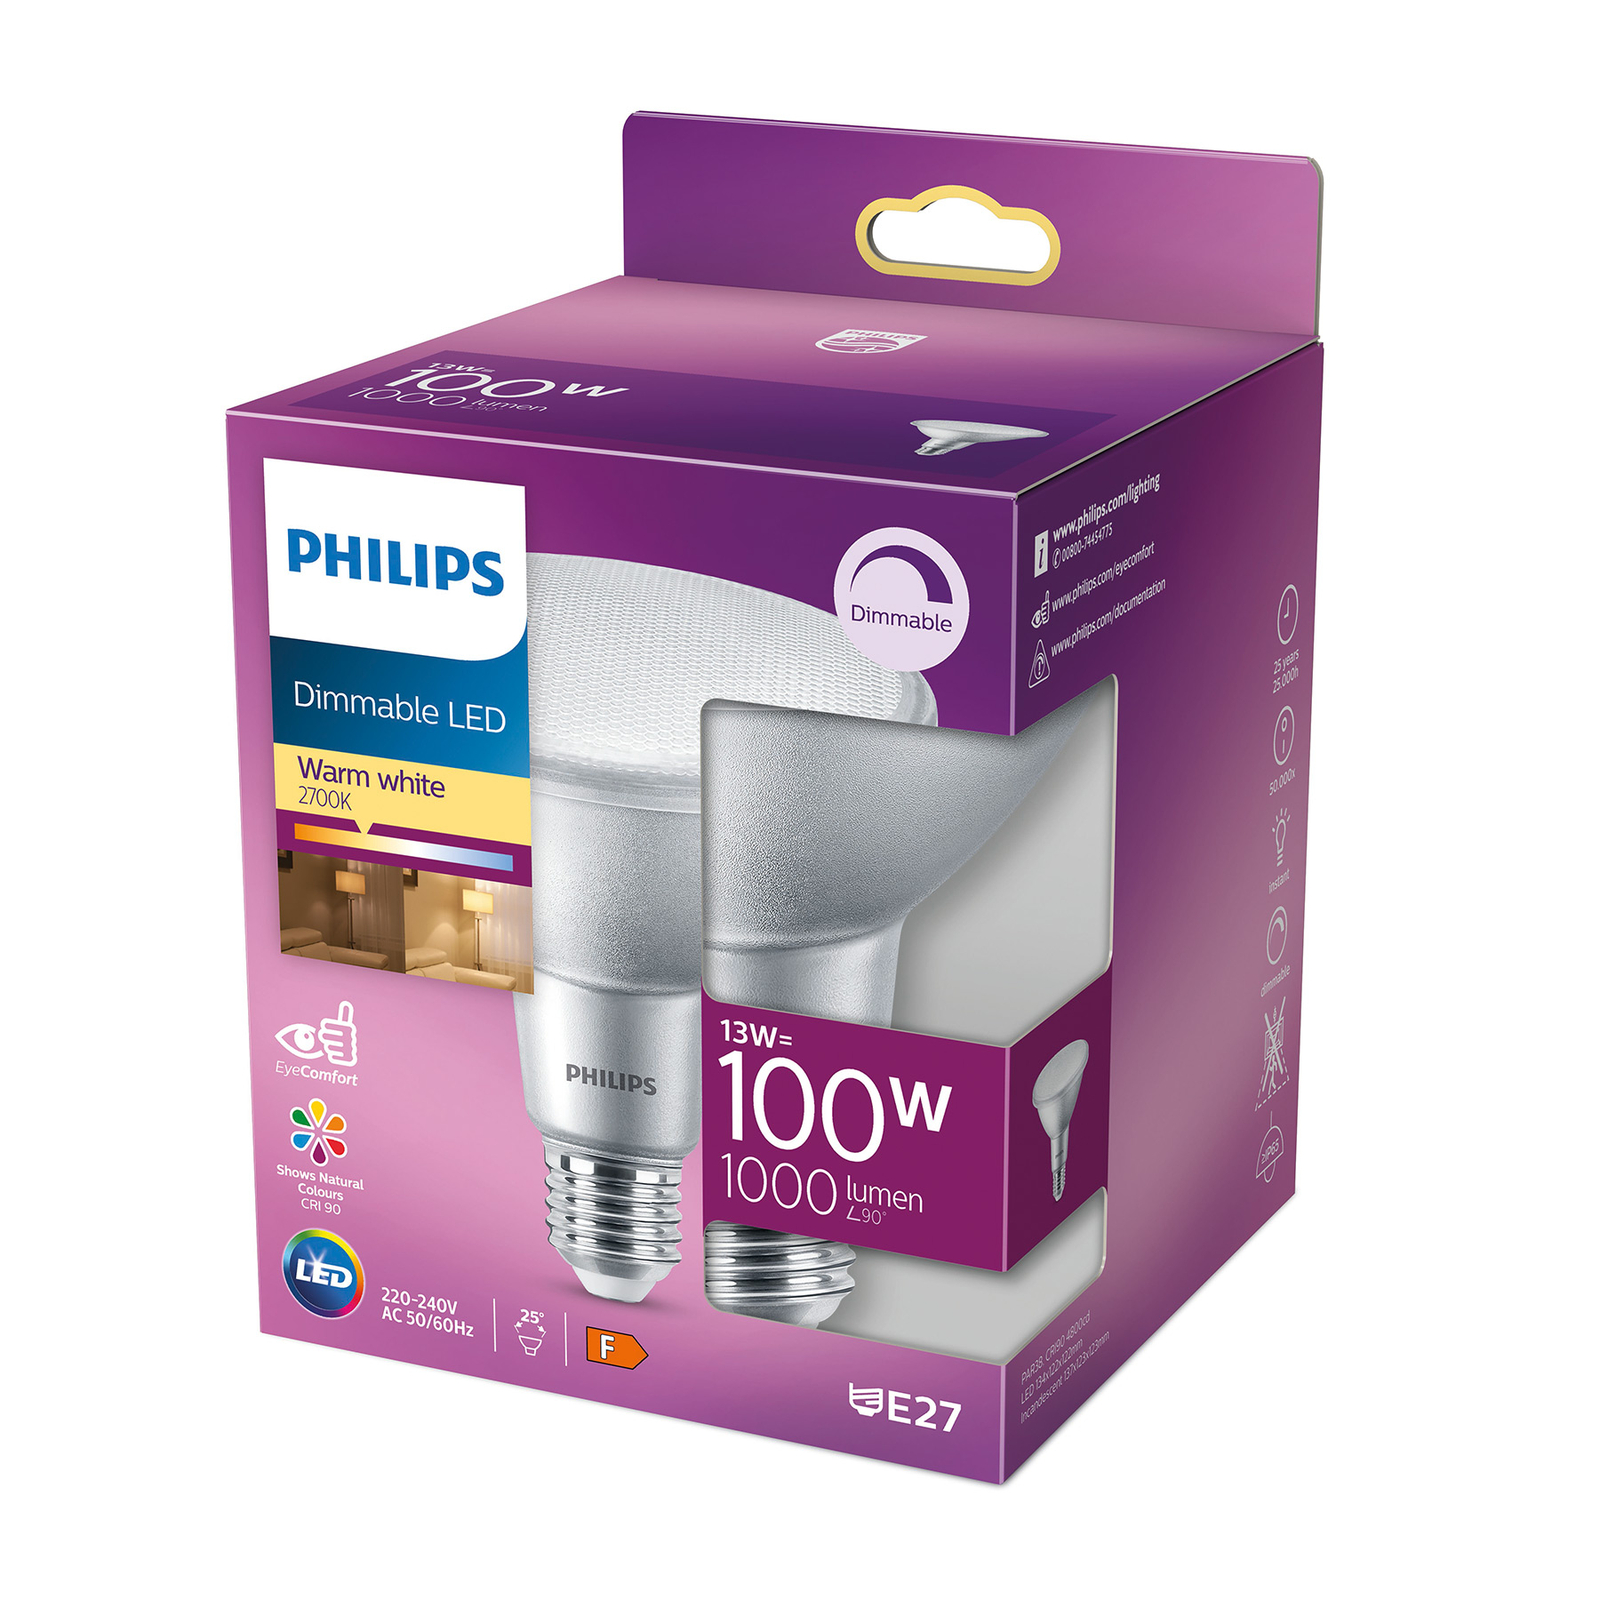 Philips LED reflektor E27 PAR38 13W 827 stmívací